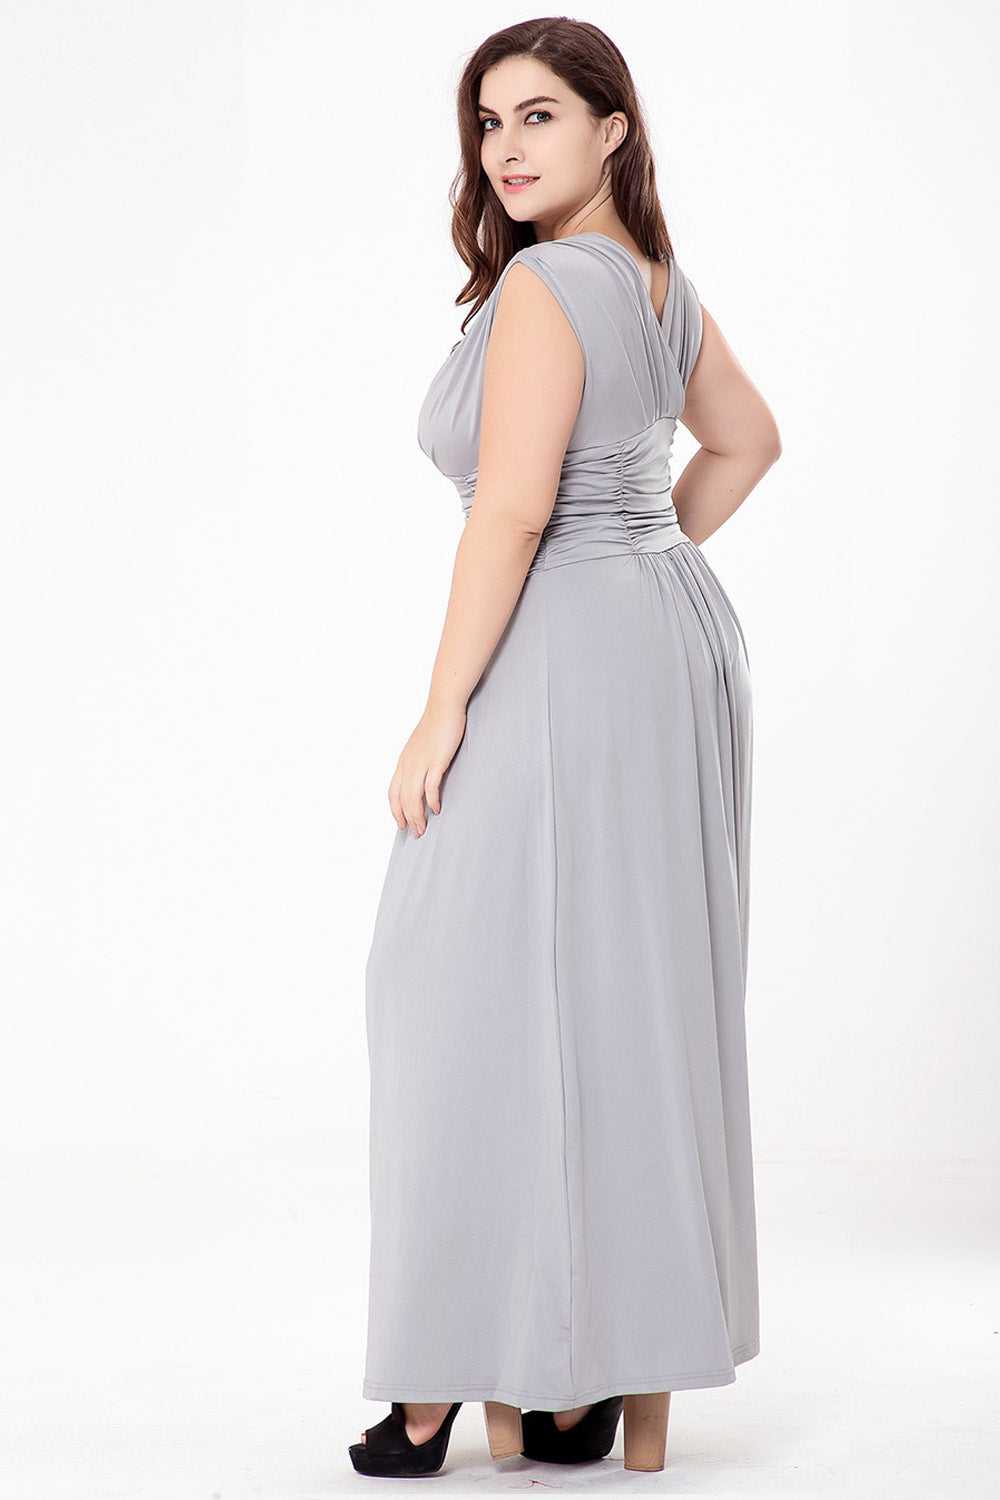 Sleeveless Plus Size Women's Dress Sai Feel